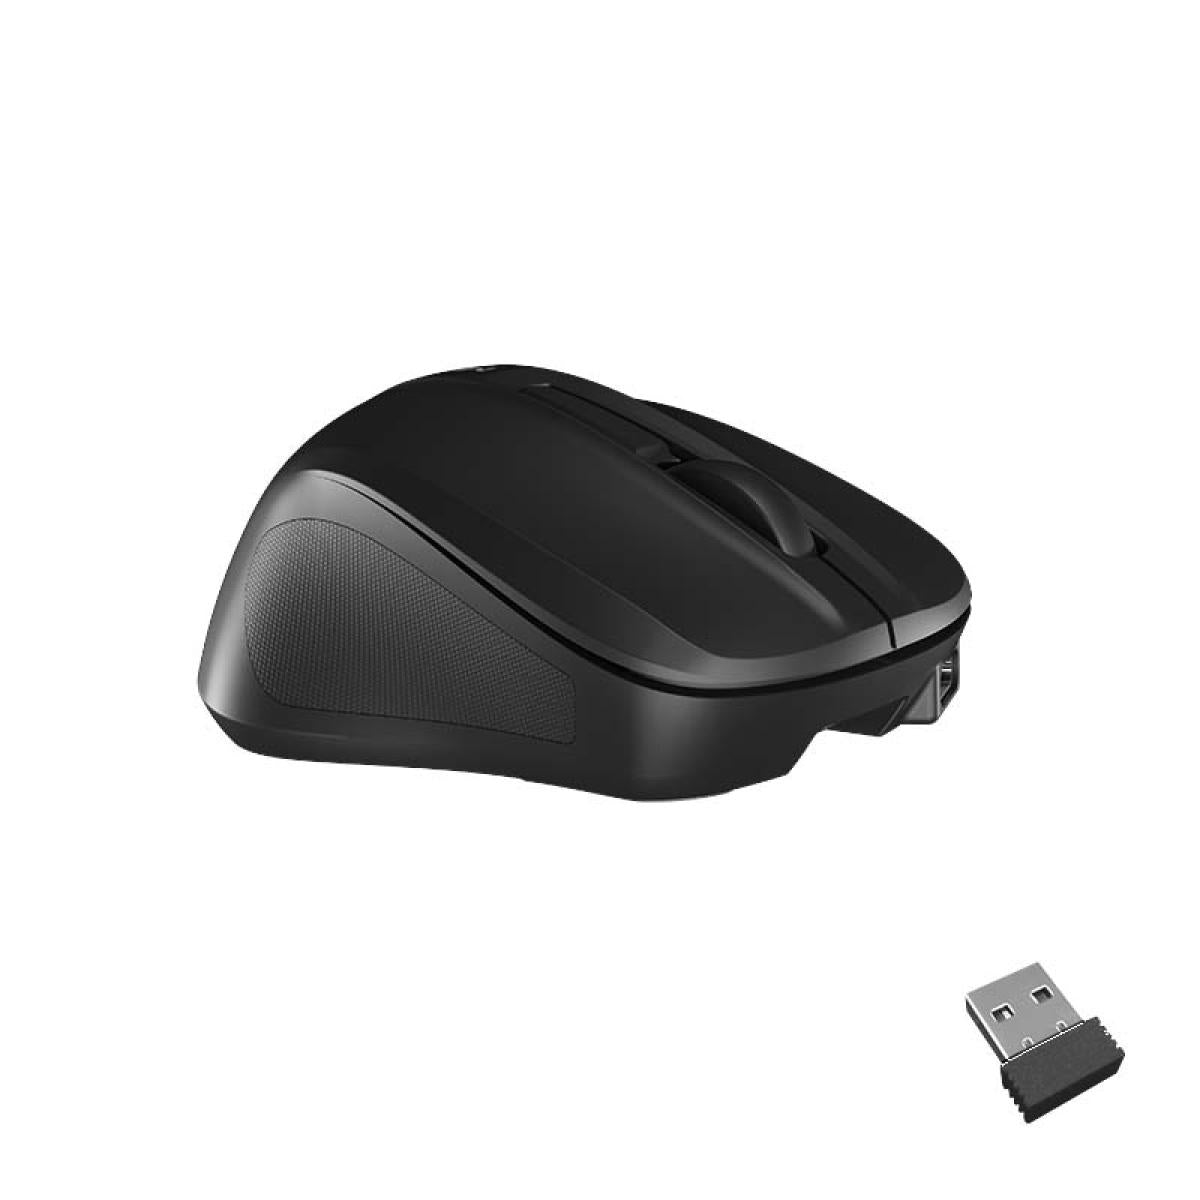 MeeTion MiniGo 4 Buttons Wireless Mouse - Black